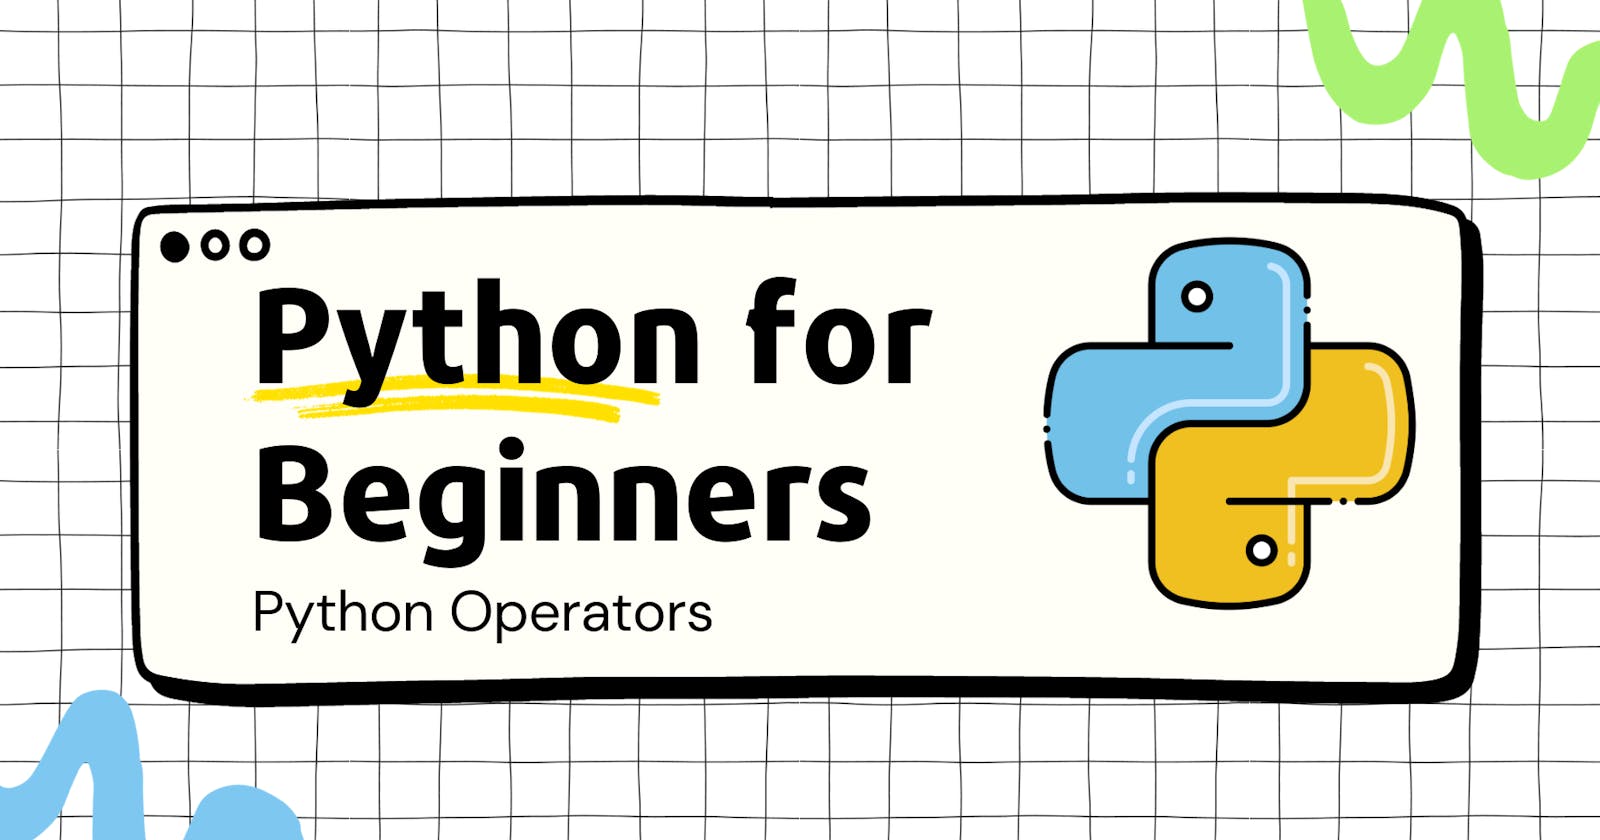 Python Operators for Beginners